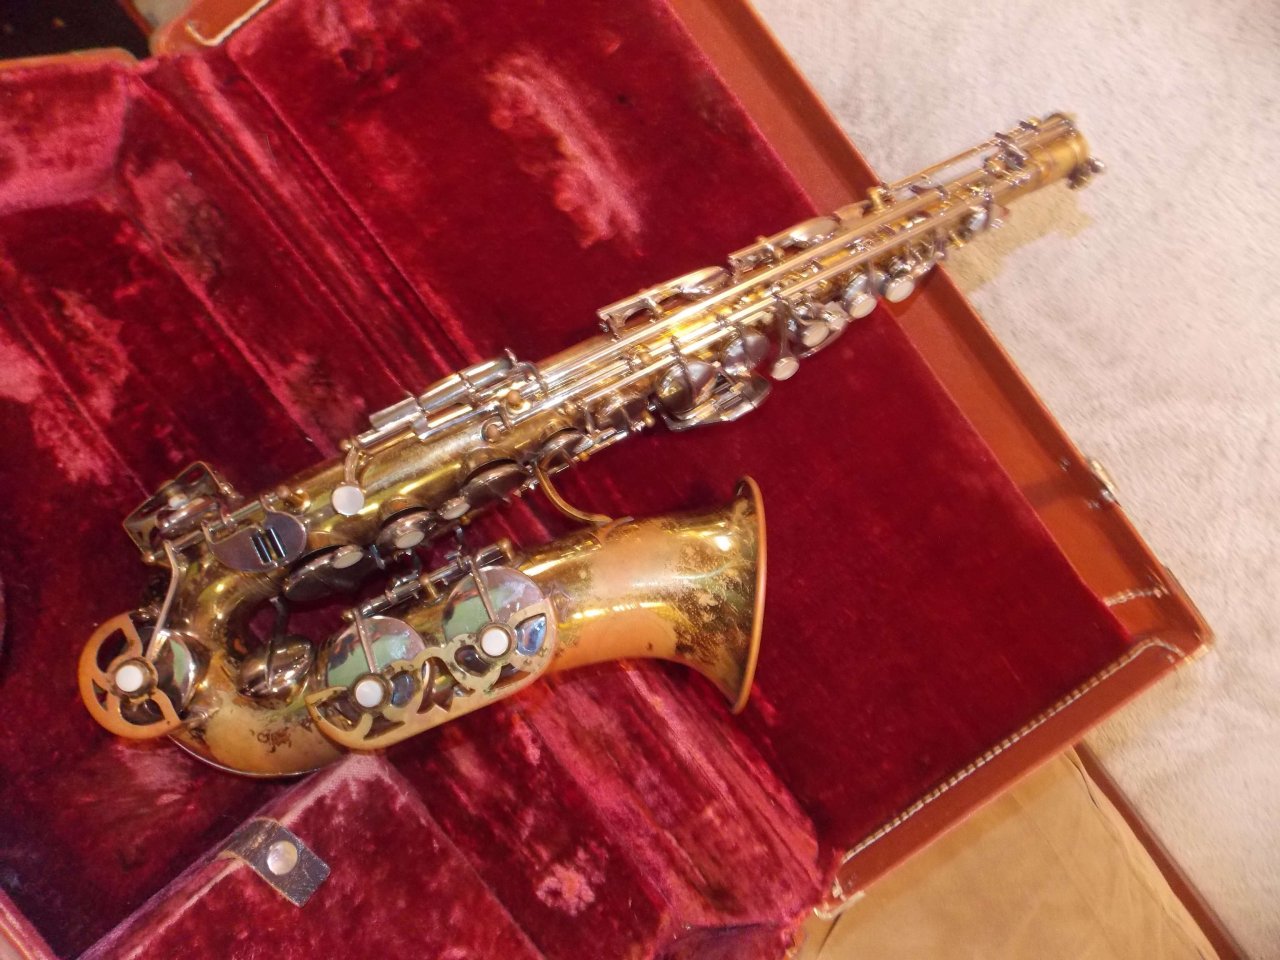 Number location serial saxophone Jupiter Saxophone